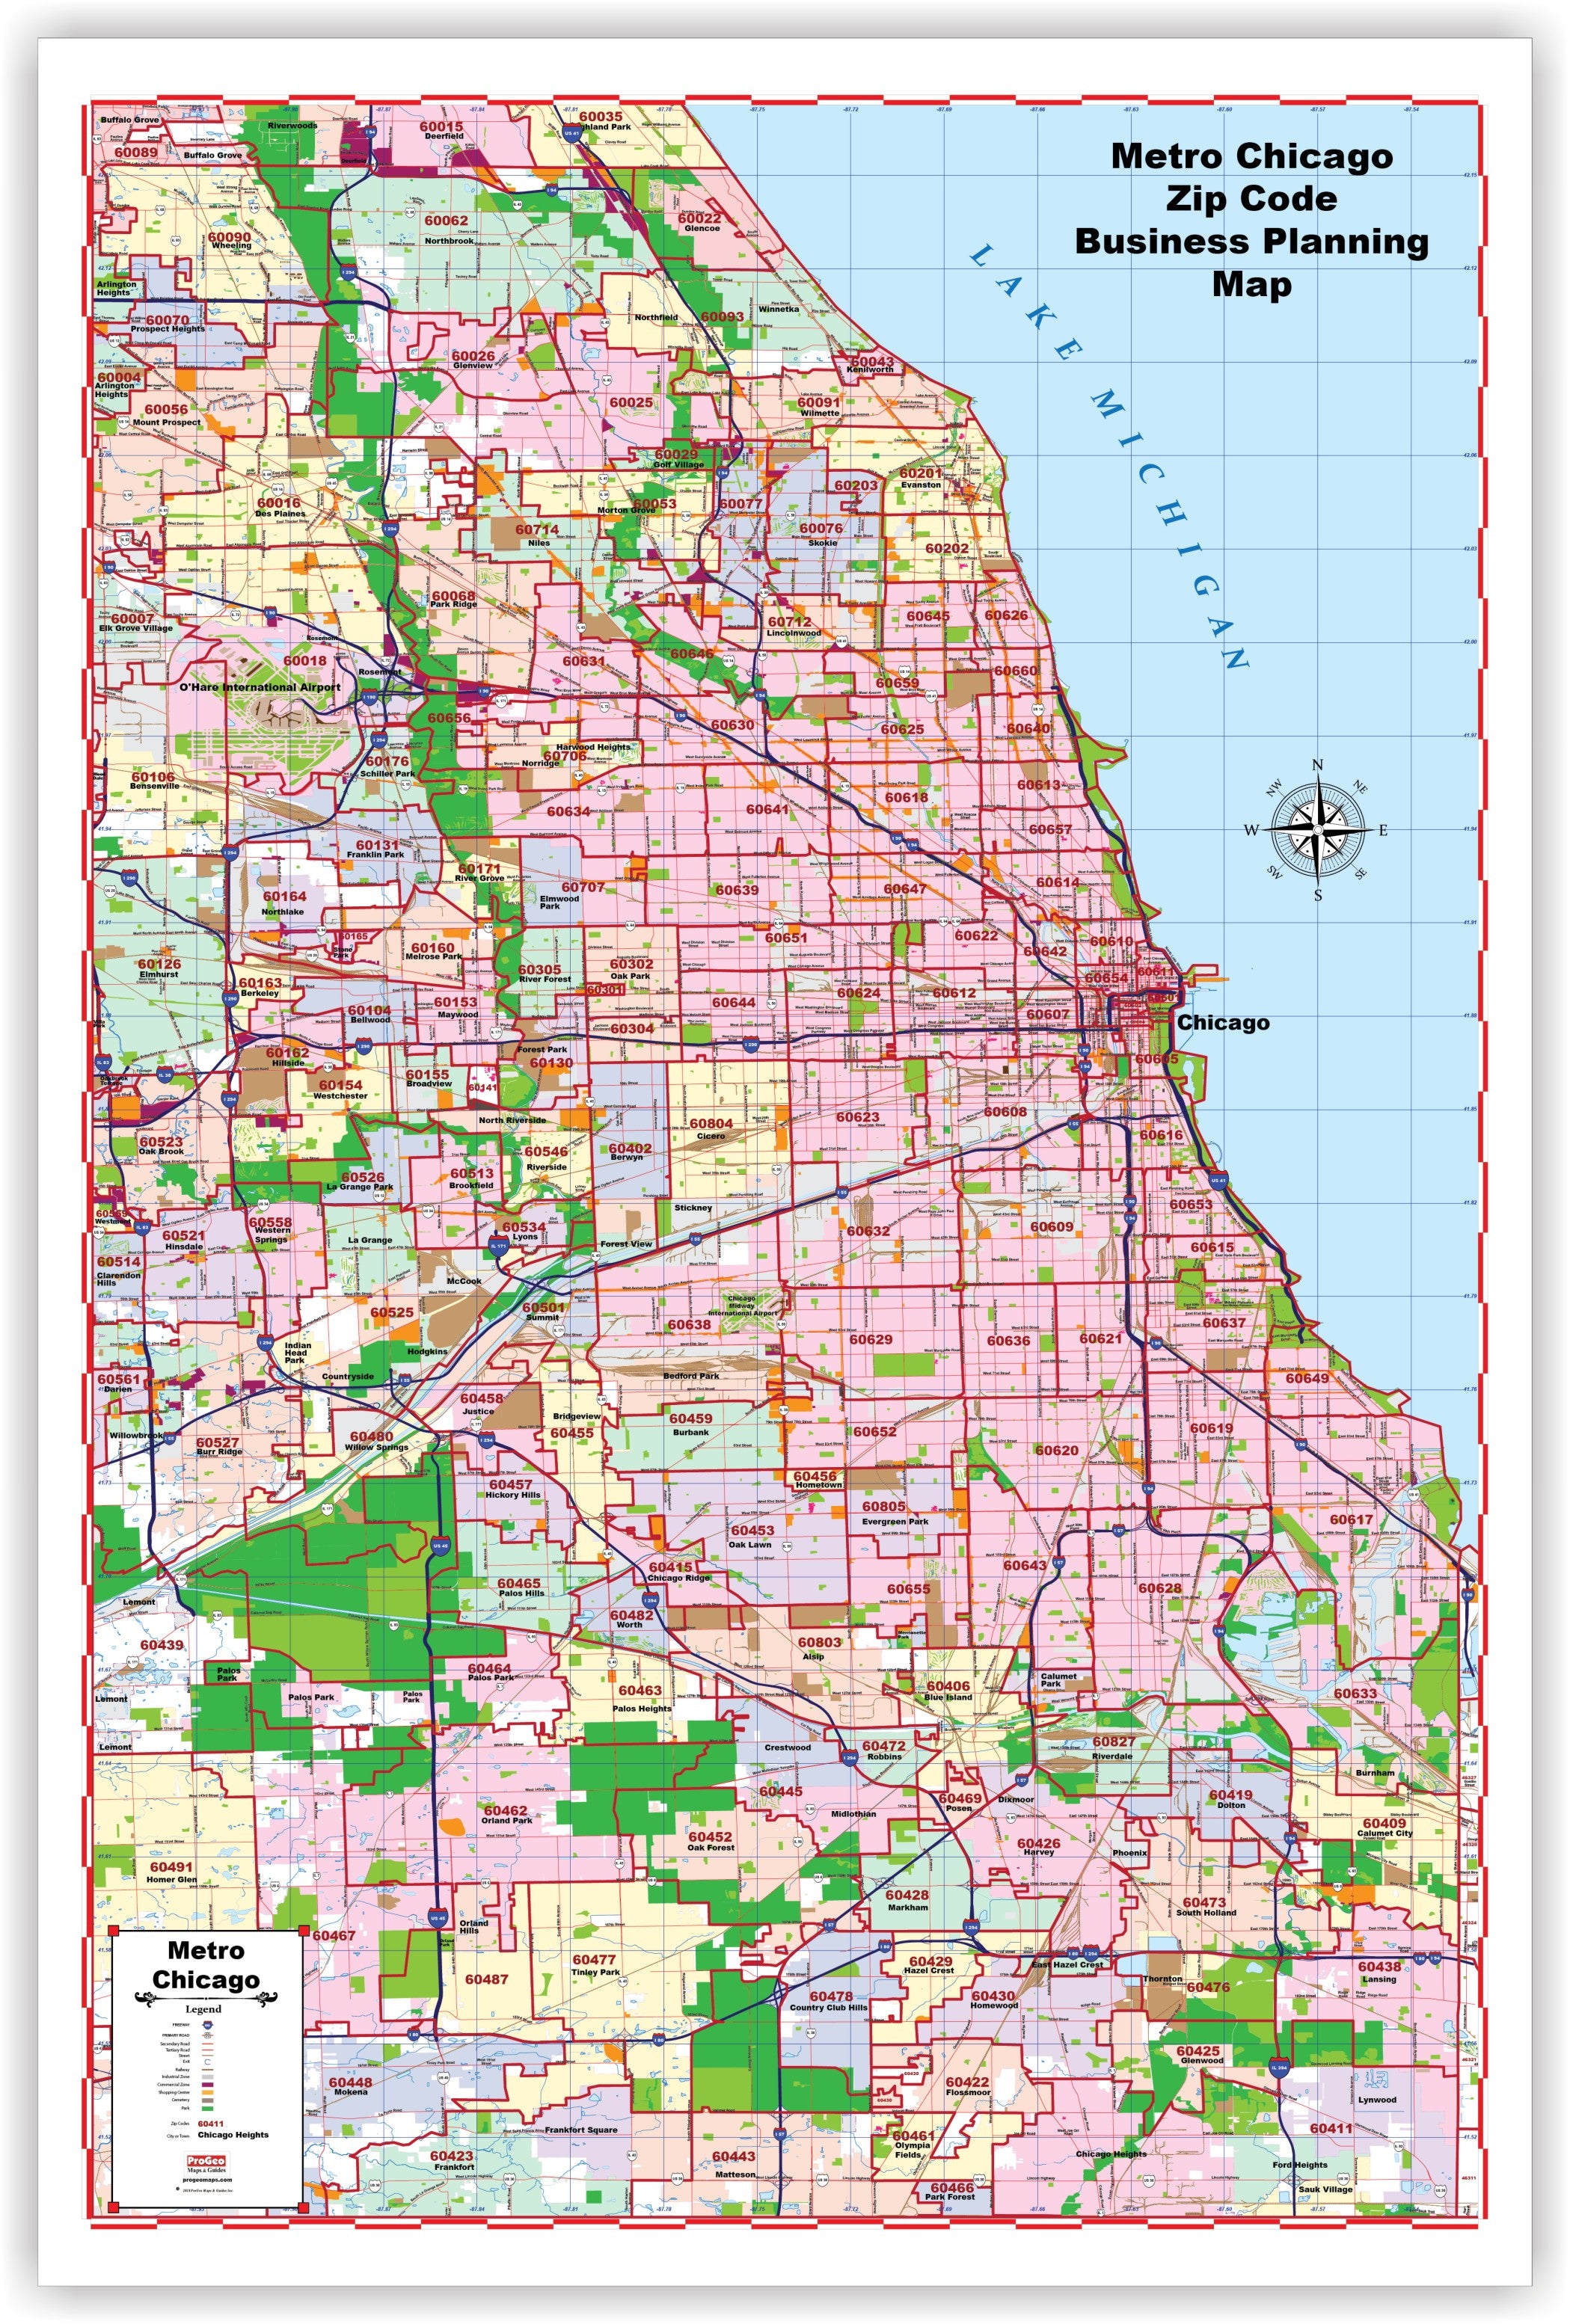 Metro Chicago Zip Code Map ProGeo Maps.JPG?v=1523307020